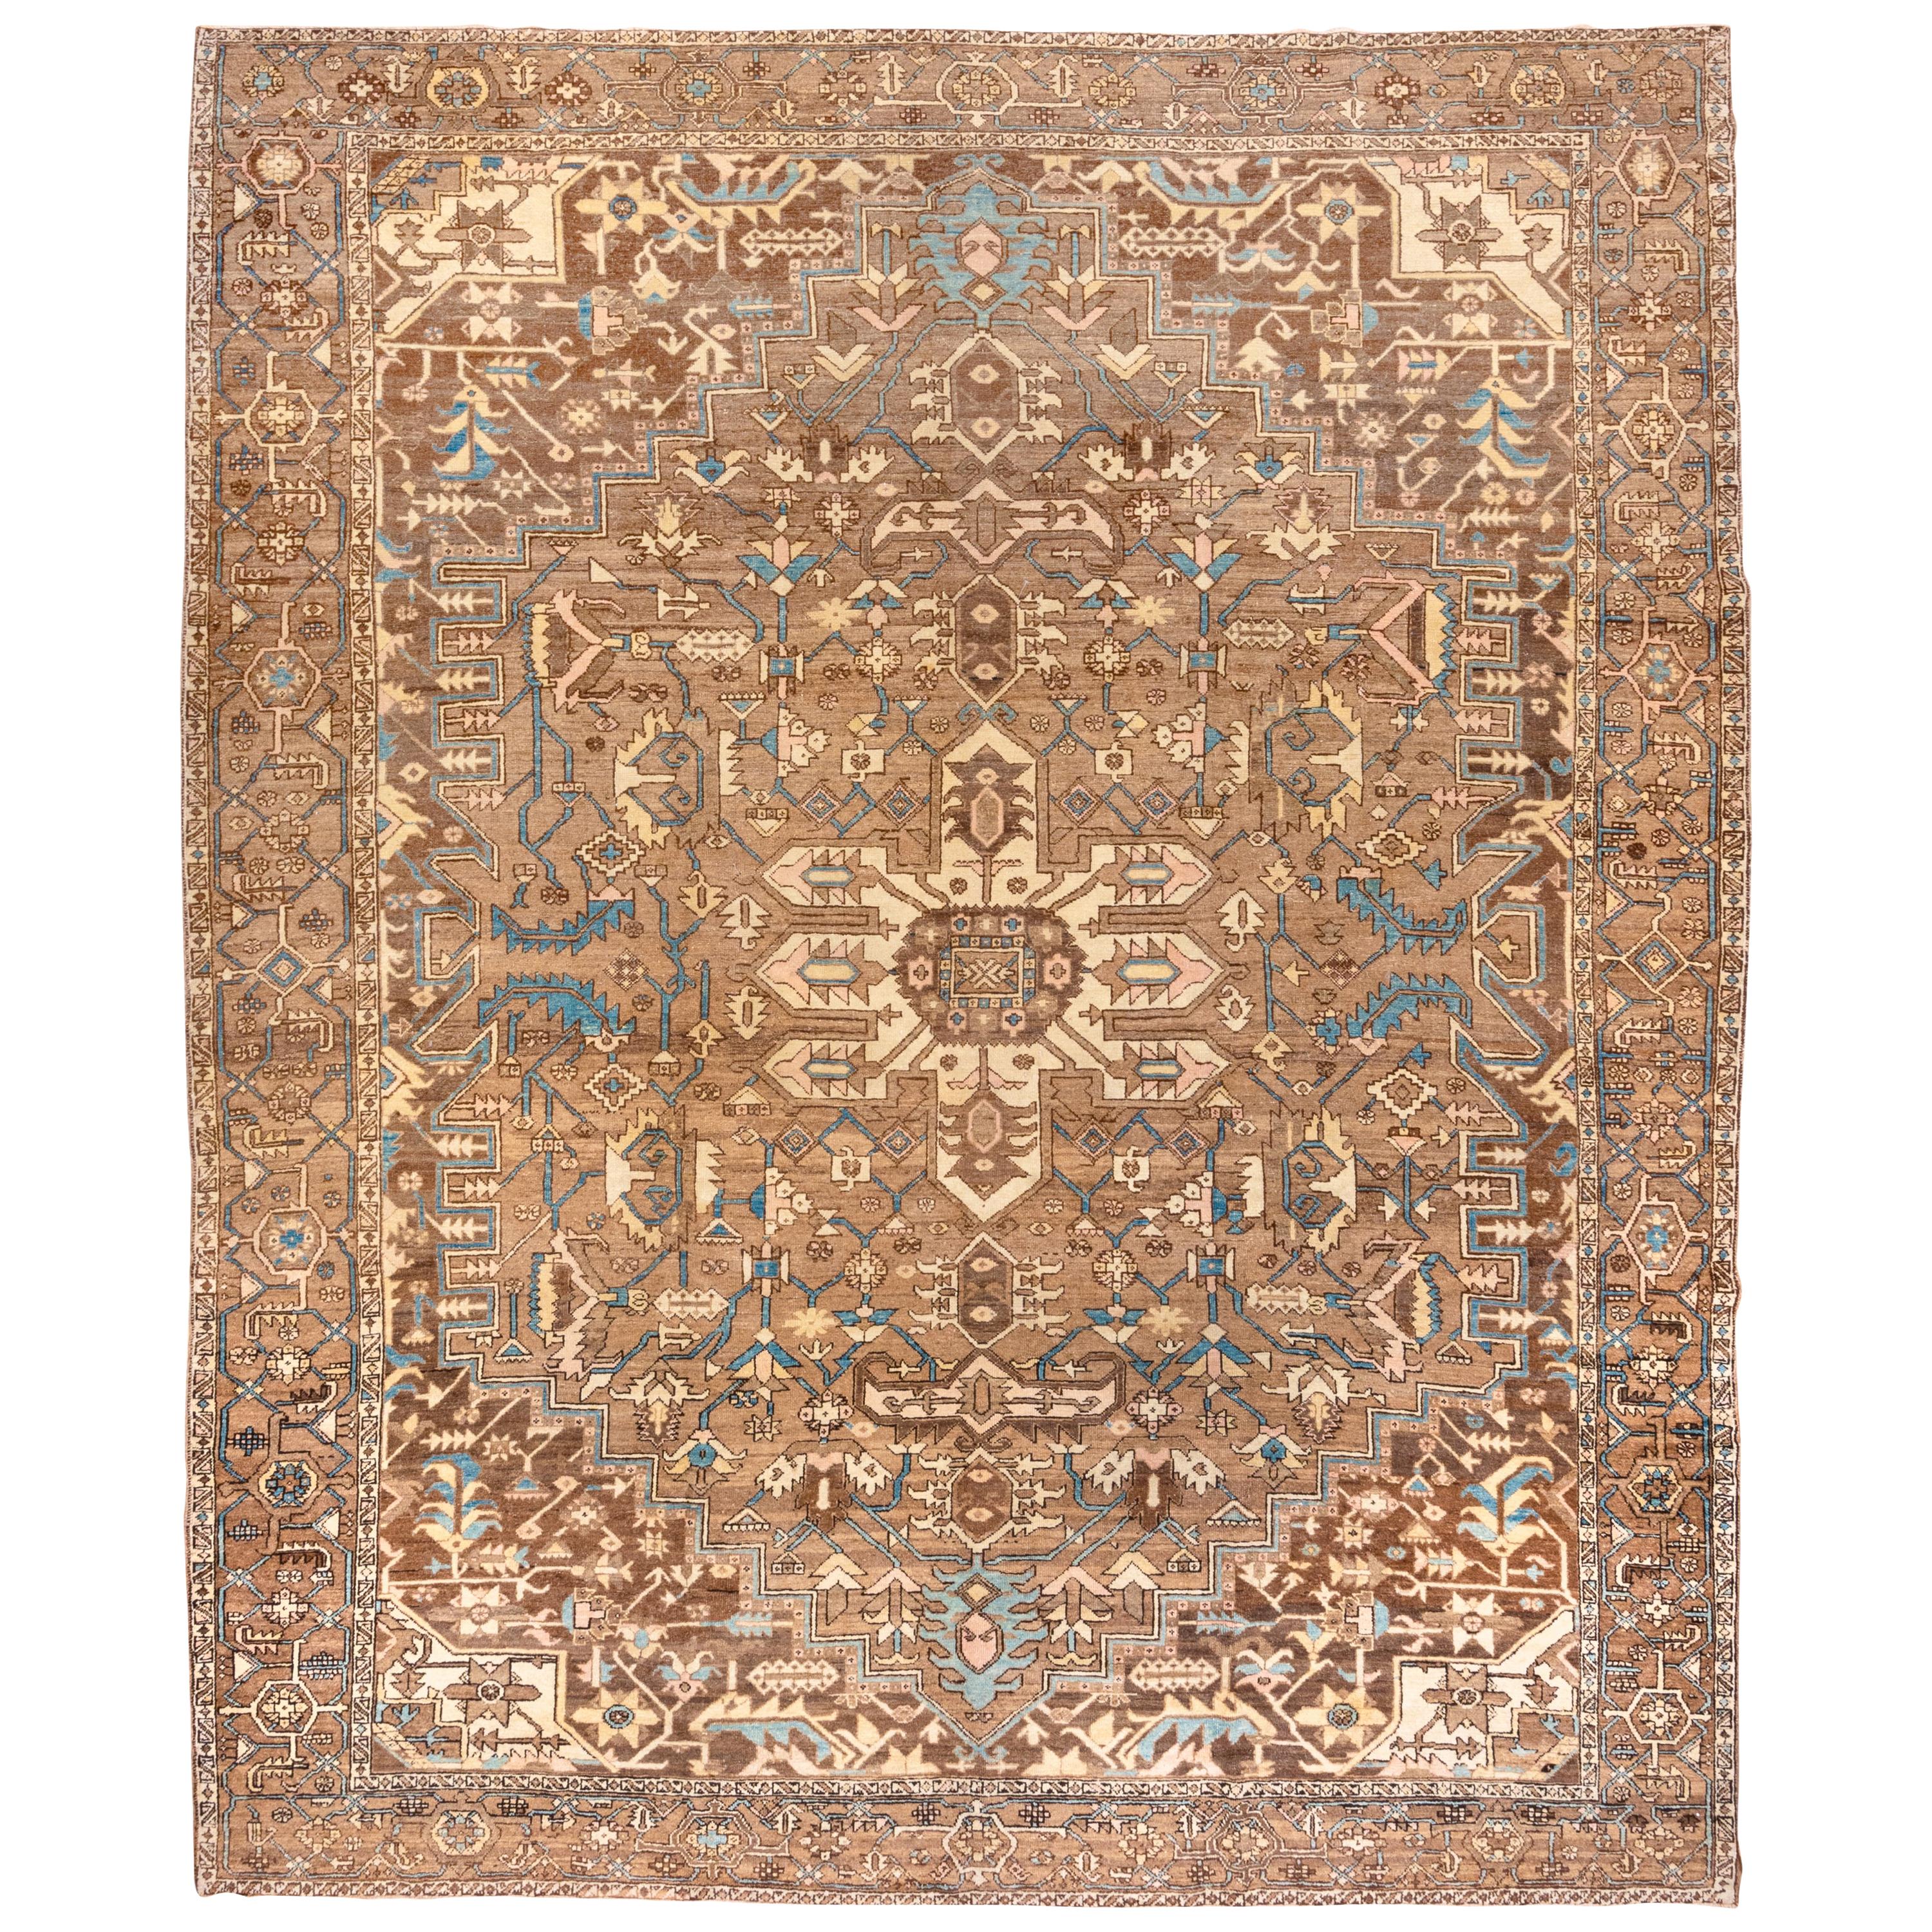 Antique Persian Heriz Serapi Carpet, circa 1910s, Neutral Palette